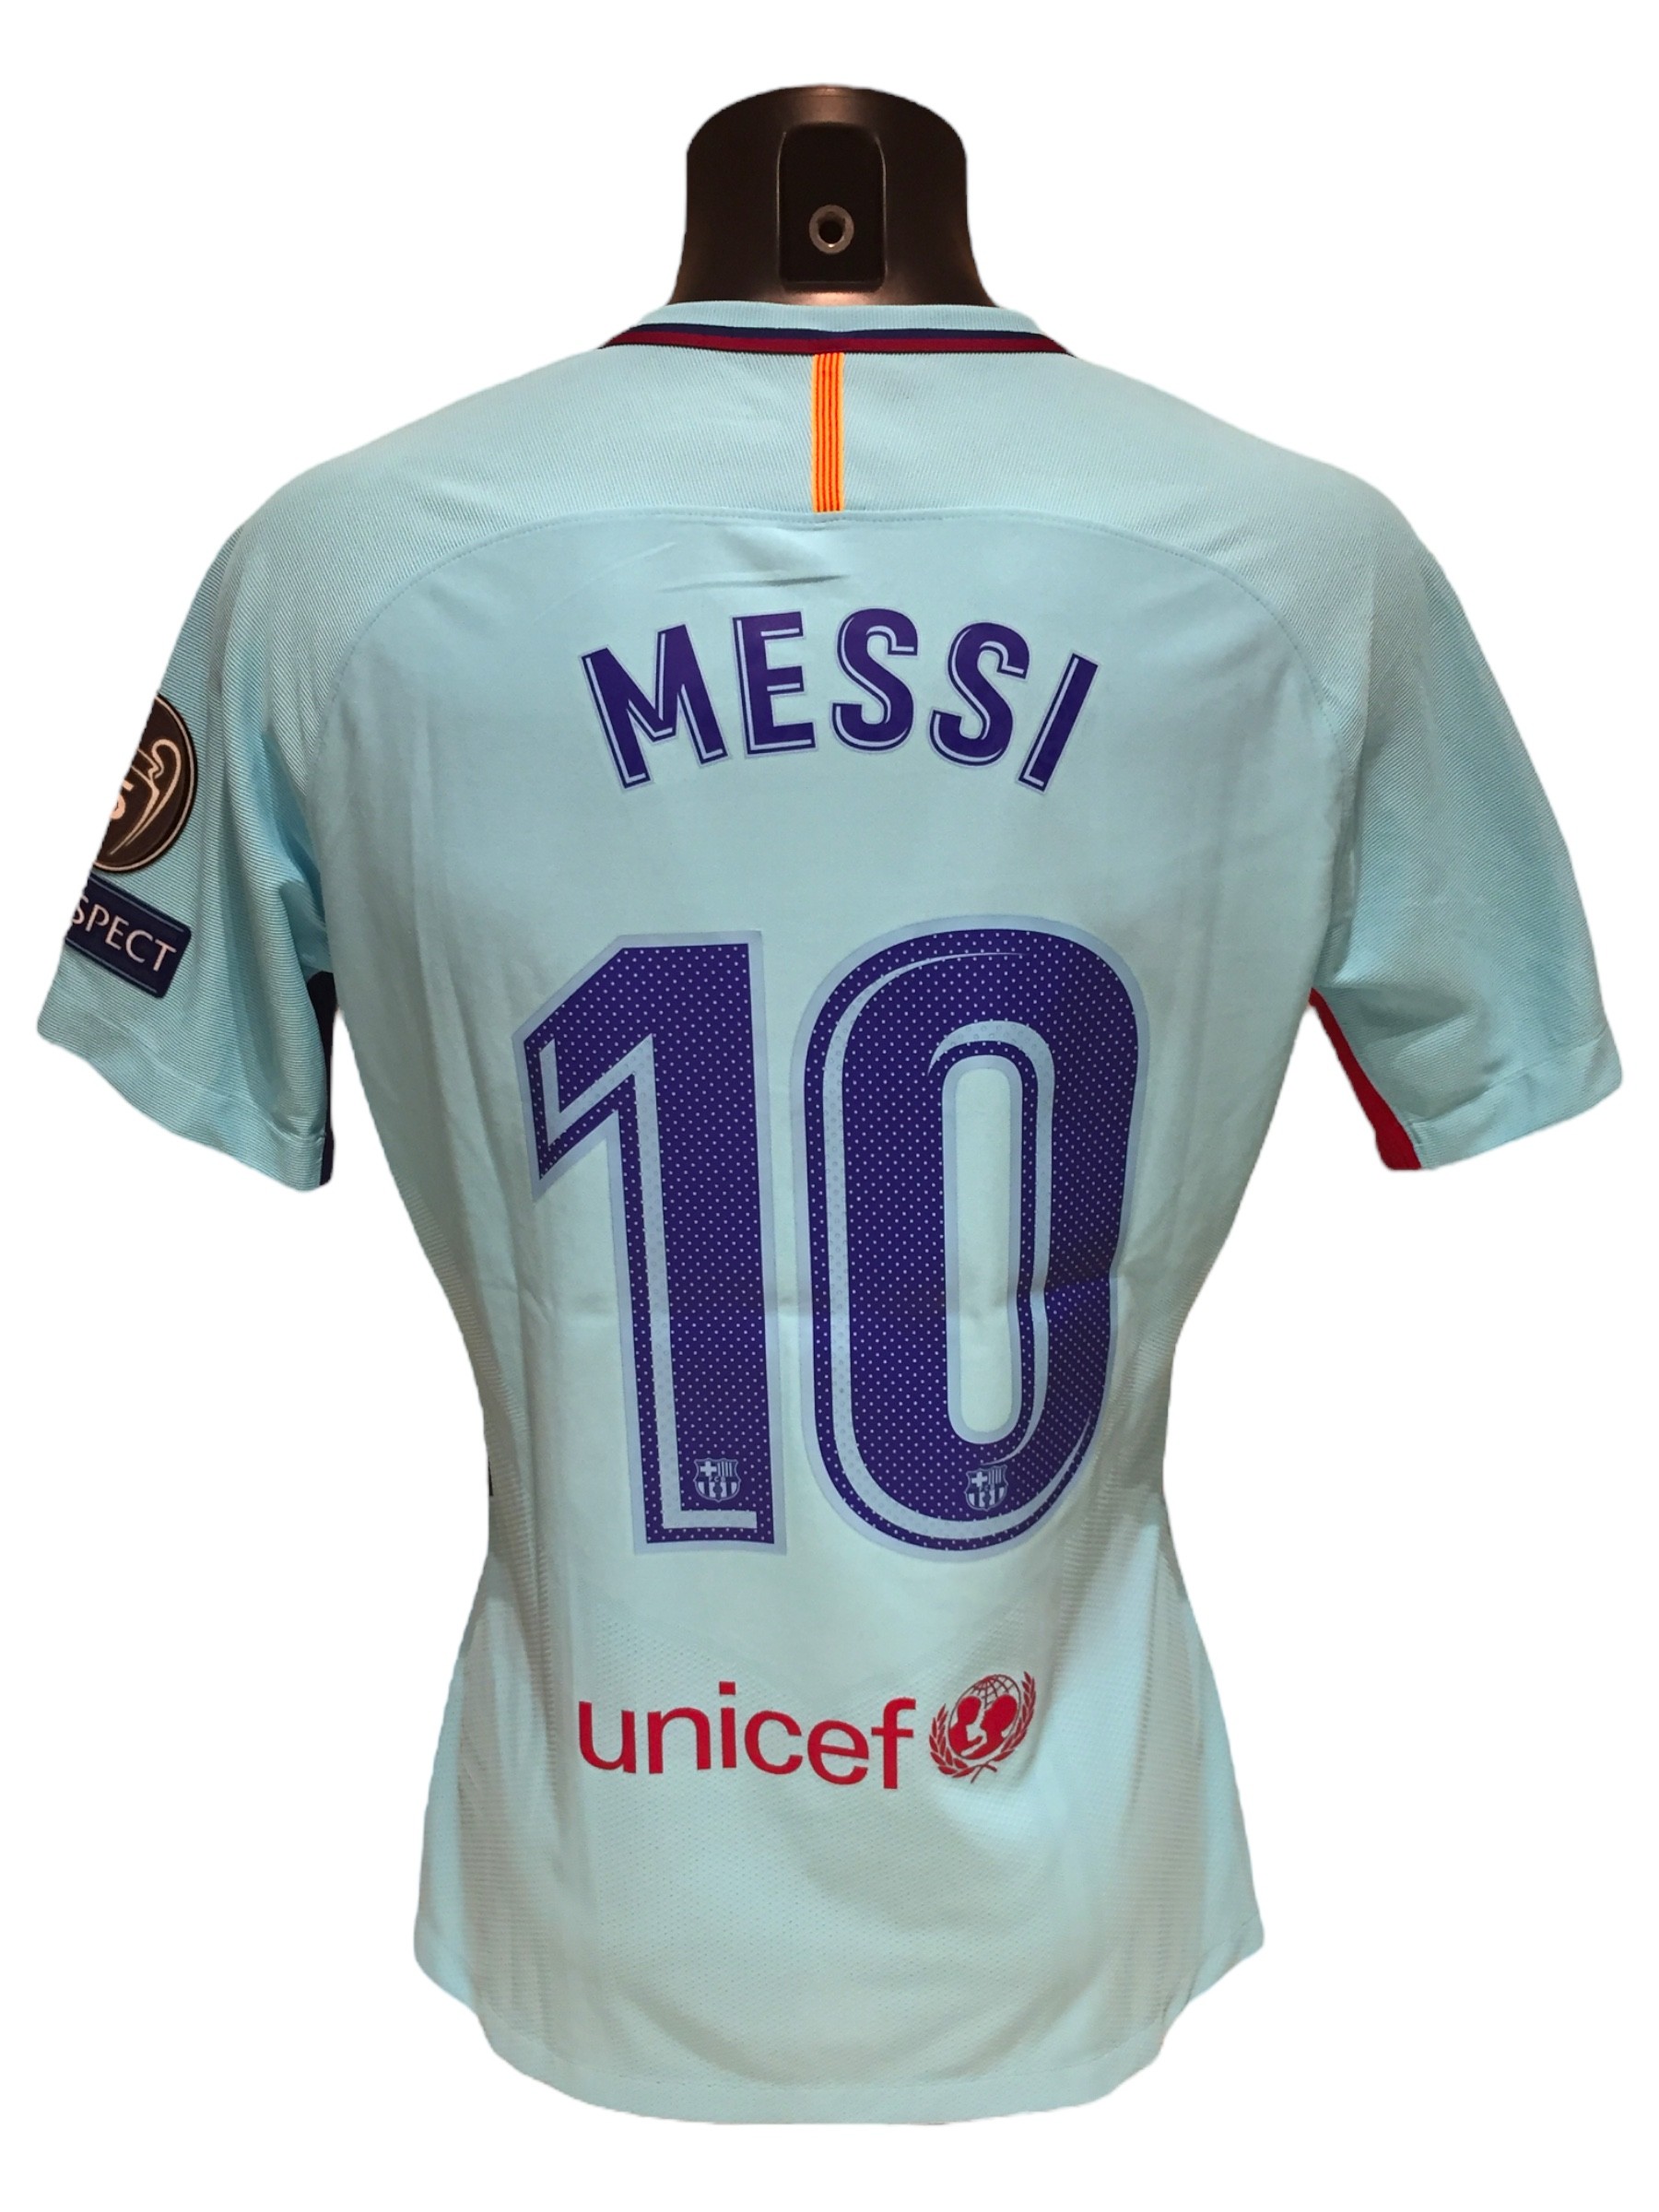 Barcelona 10 MESSI Shirt producte oficial FCB UNICEF size 12